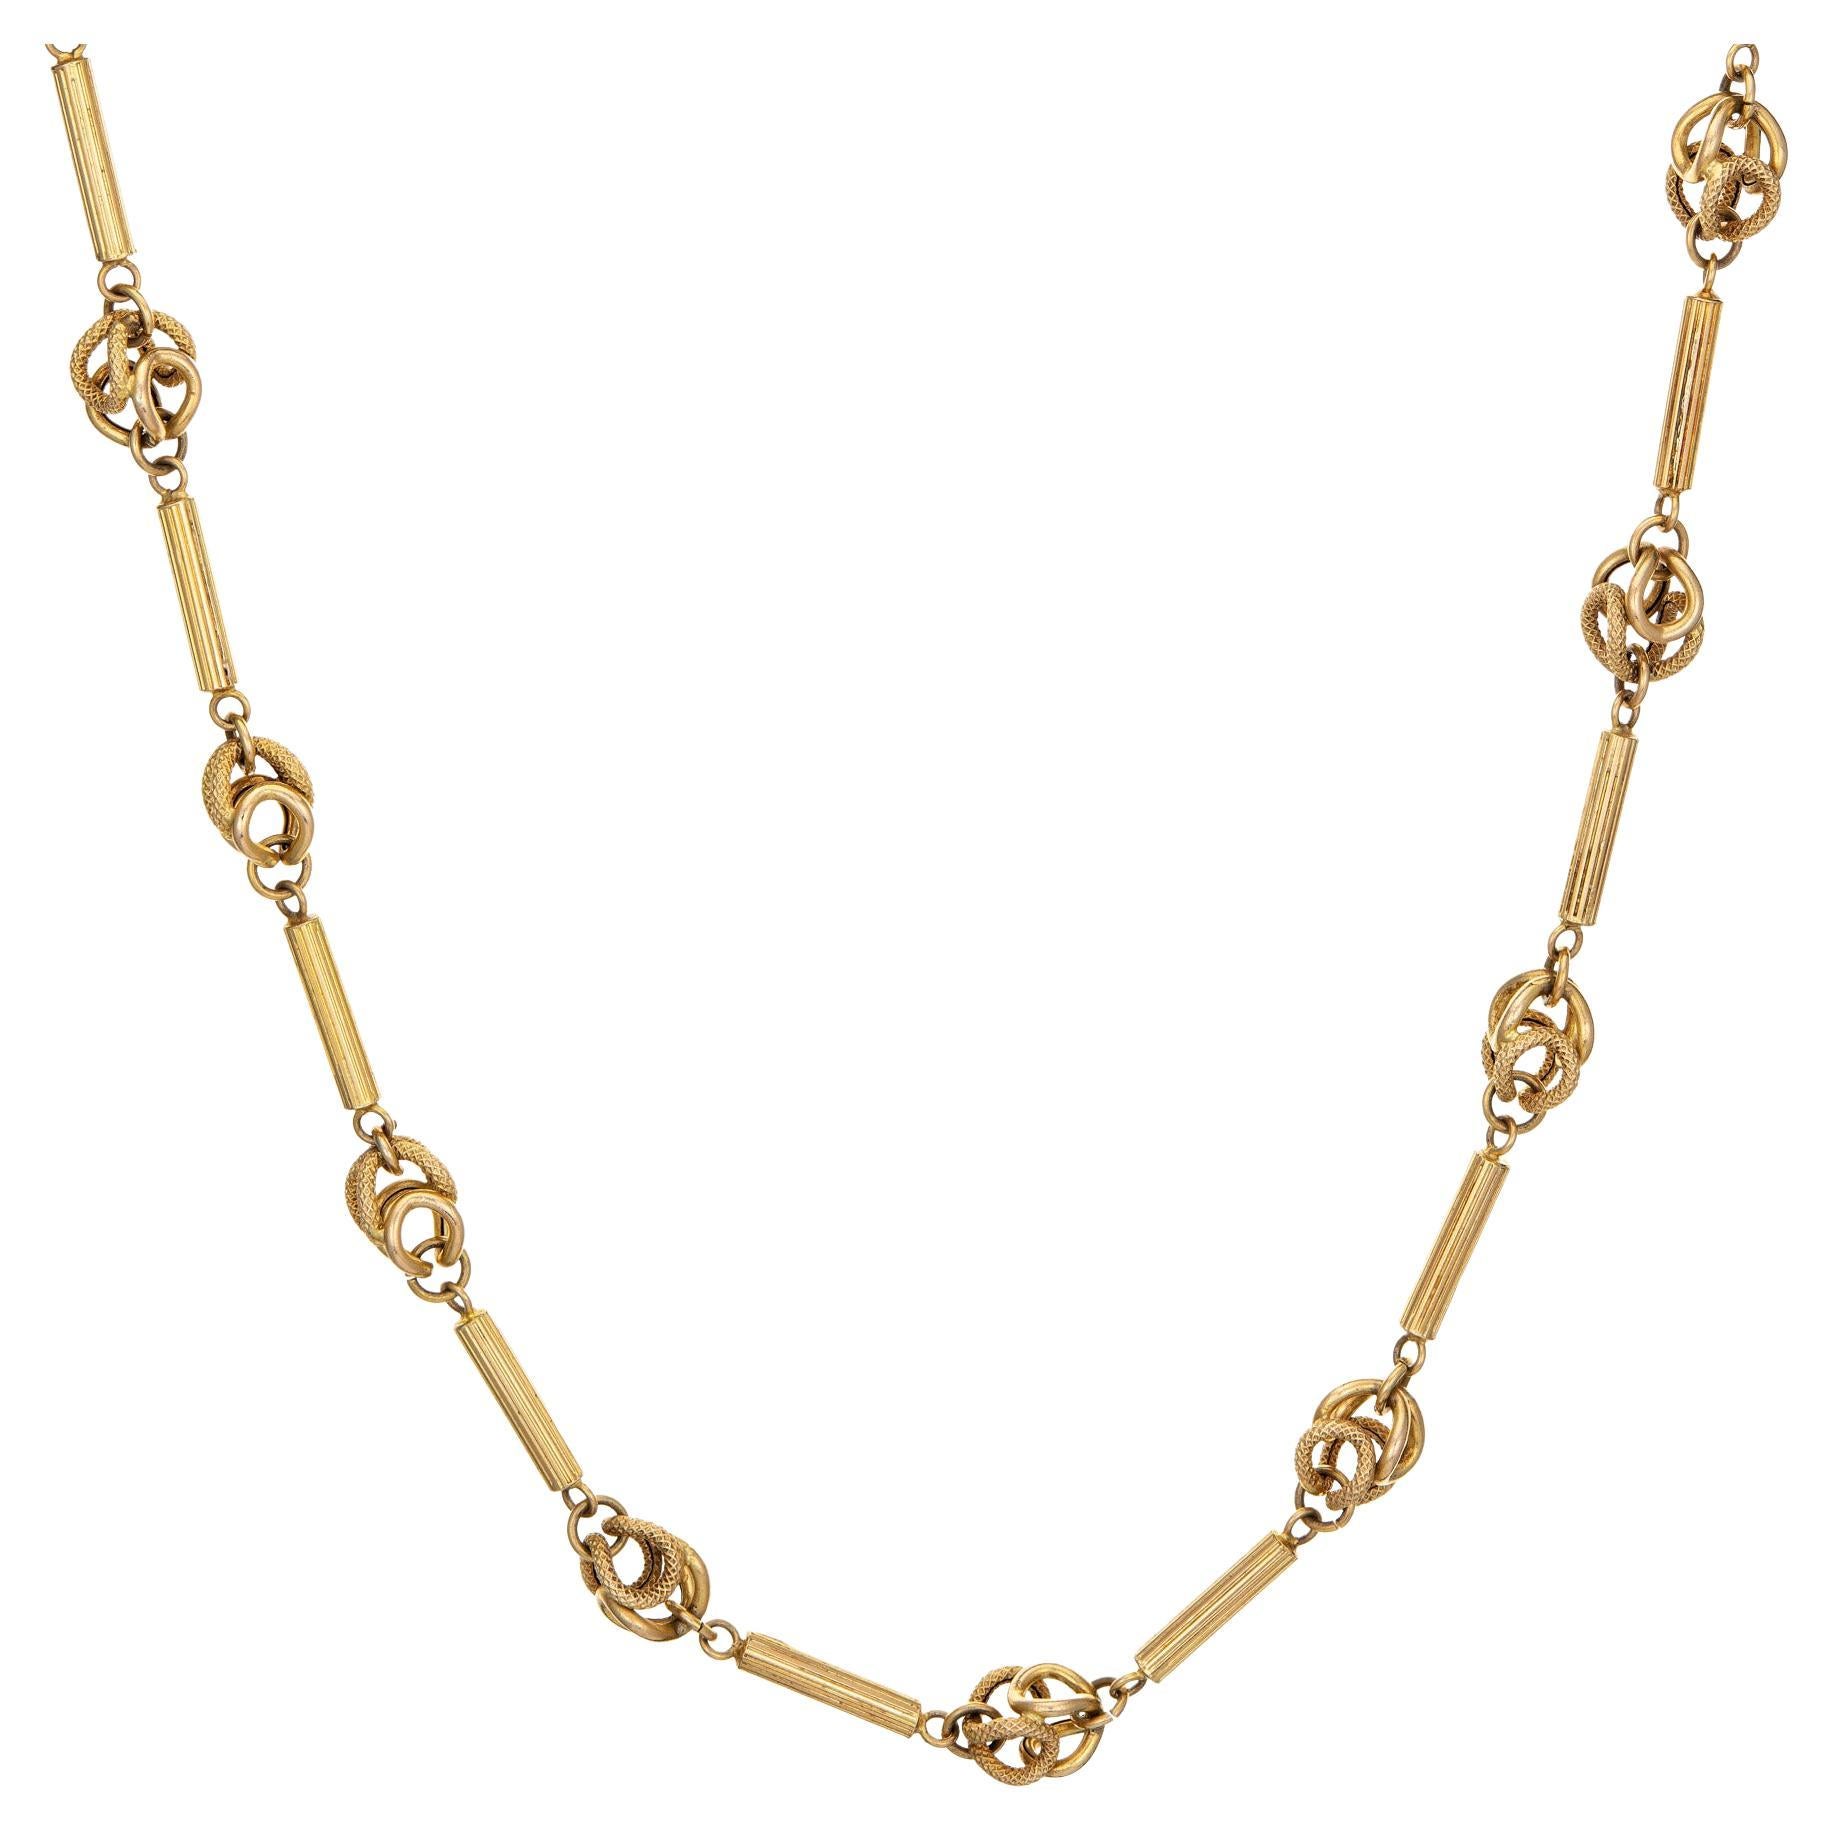 Fancy Link Necklace Vintage 14k Yellow Gold 26" Length Scrolled Links Estate For Sale